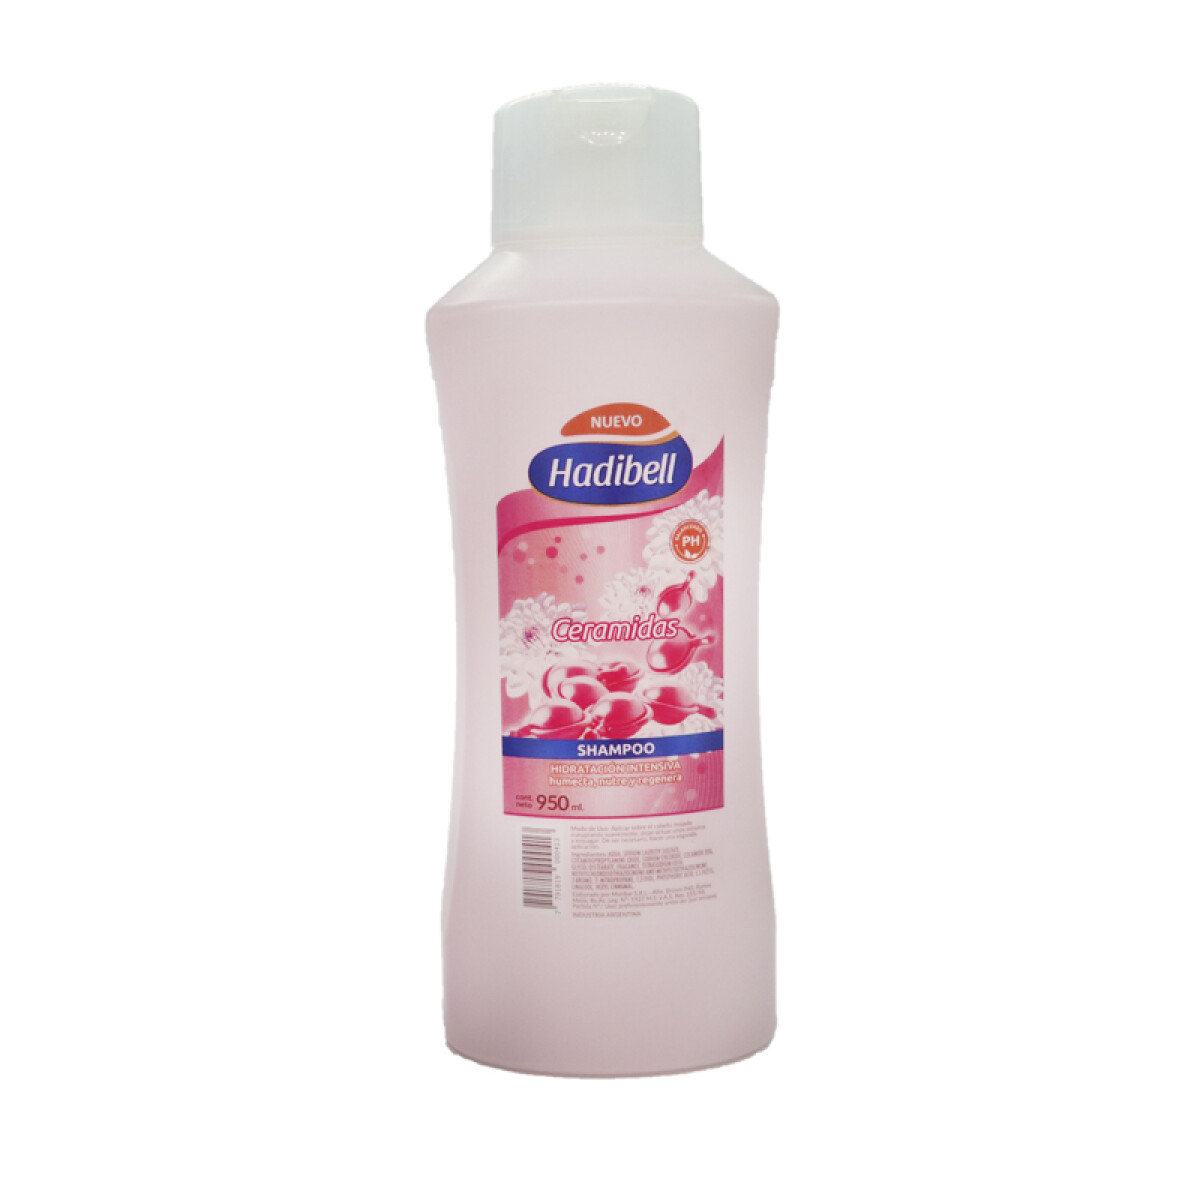 Shampoo HADIBELL 950cc - Shampoo Ceramidas 